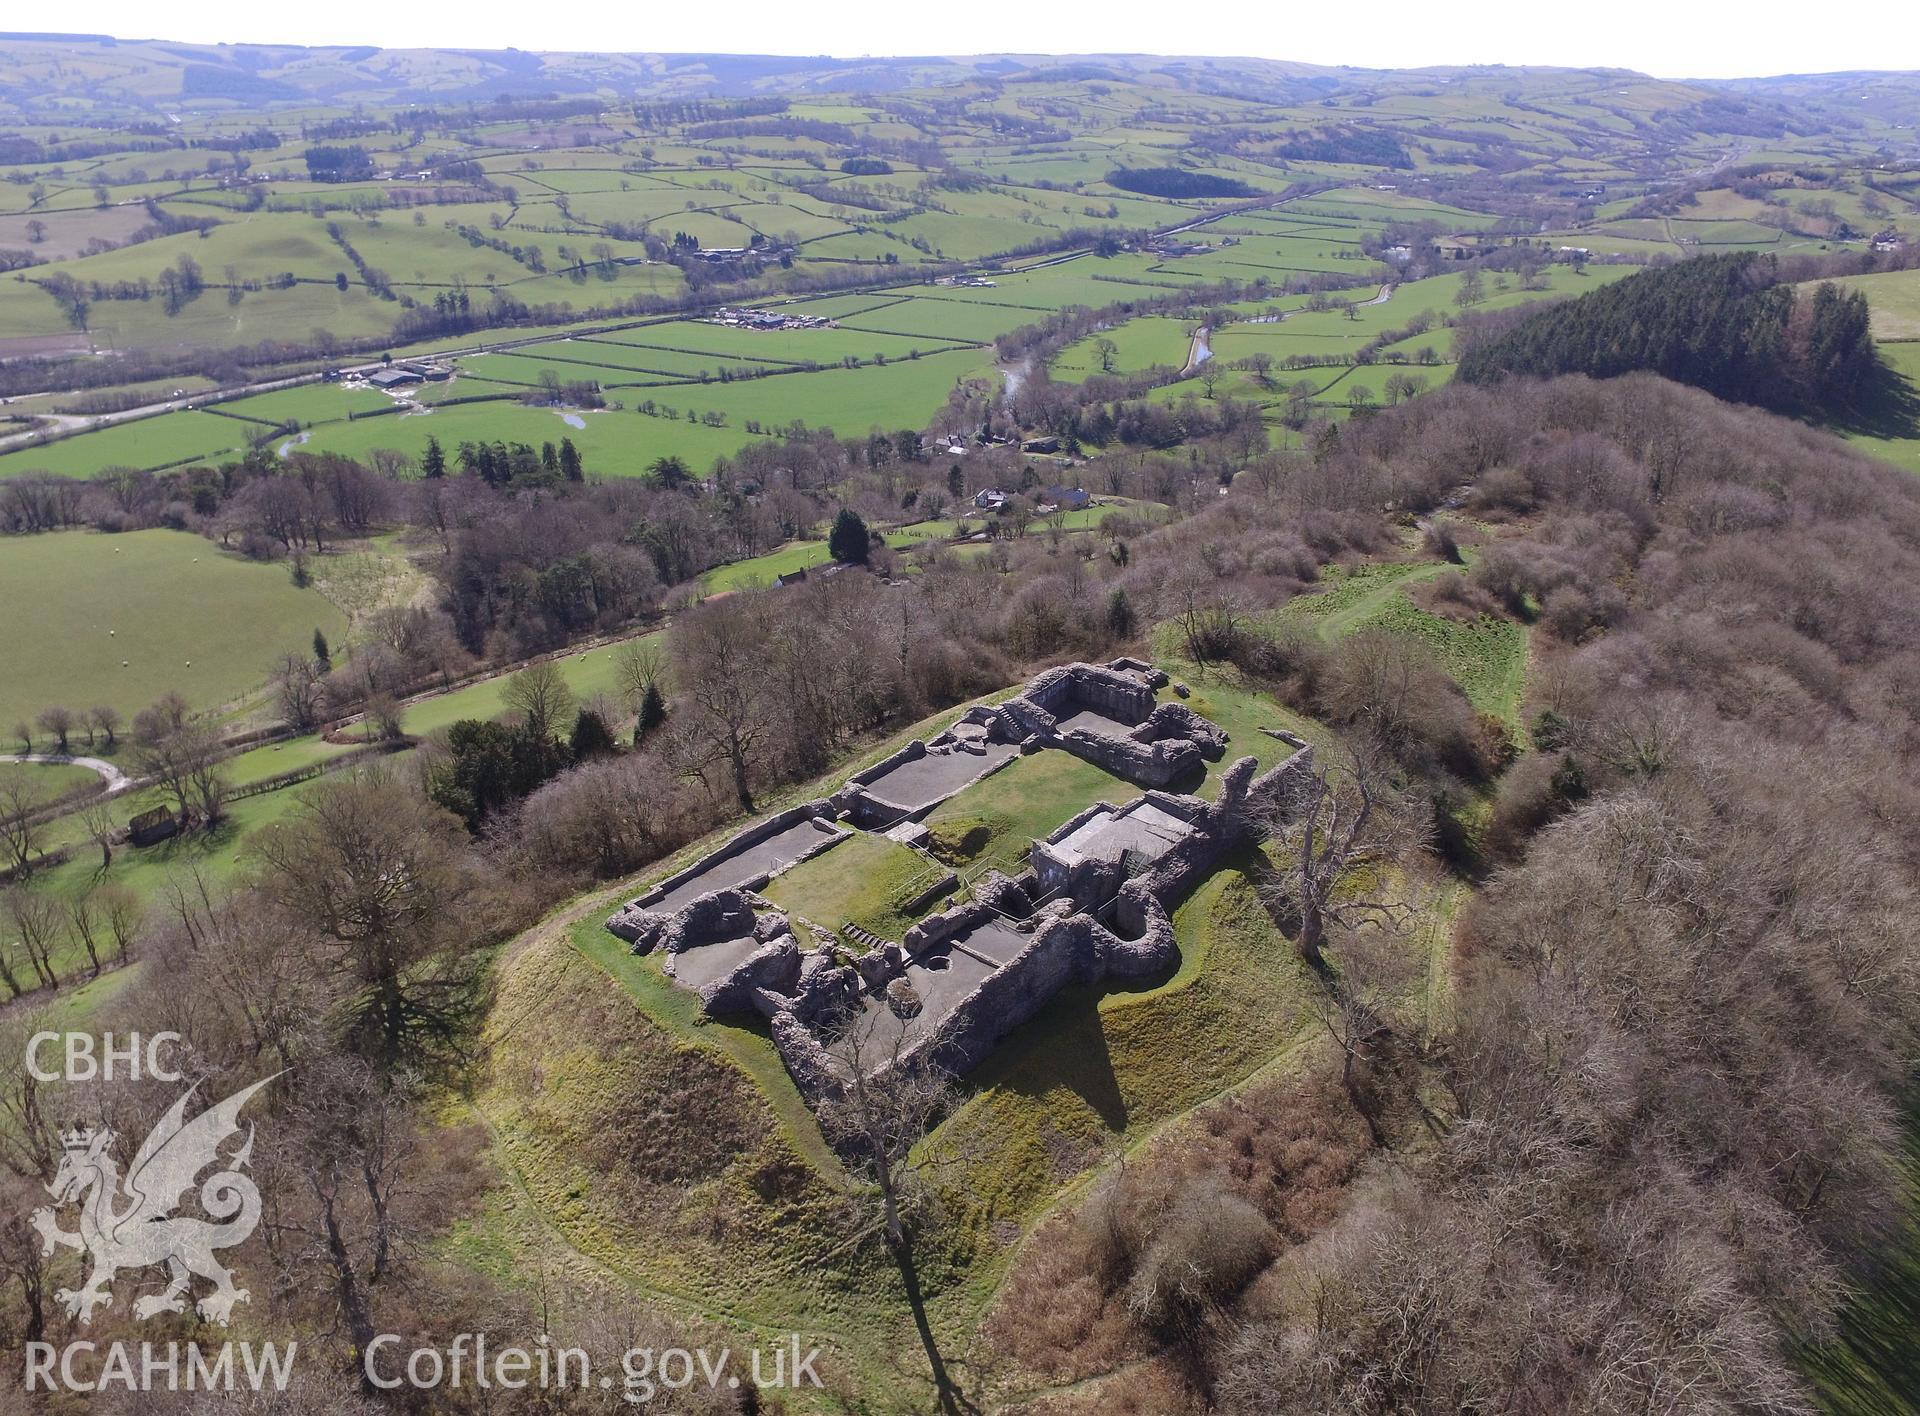 Colour photo showing view of Dolforwyn Castle, Abermule, taken by Paul R. Davis, 2018.